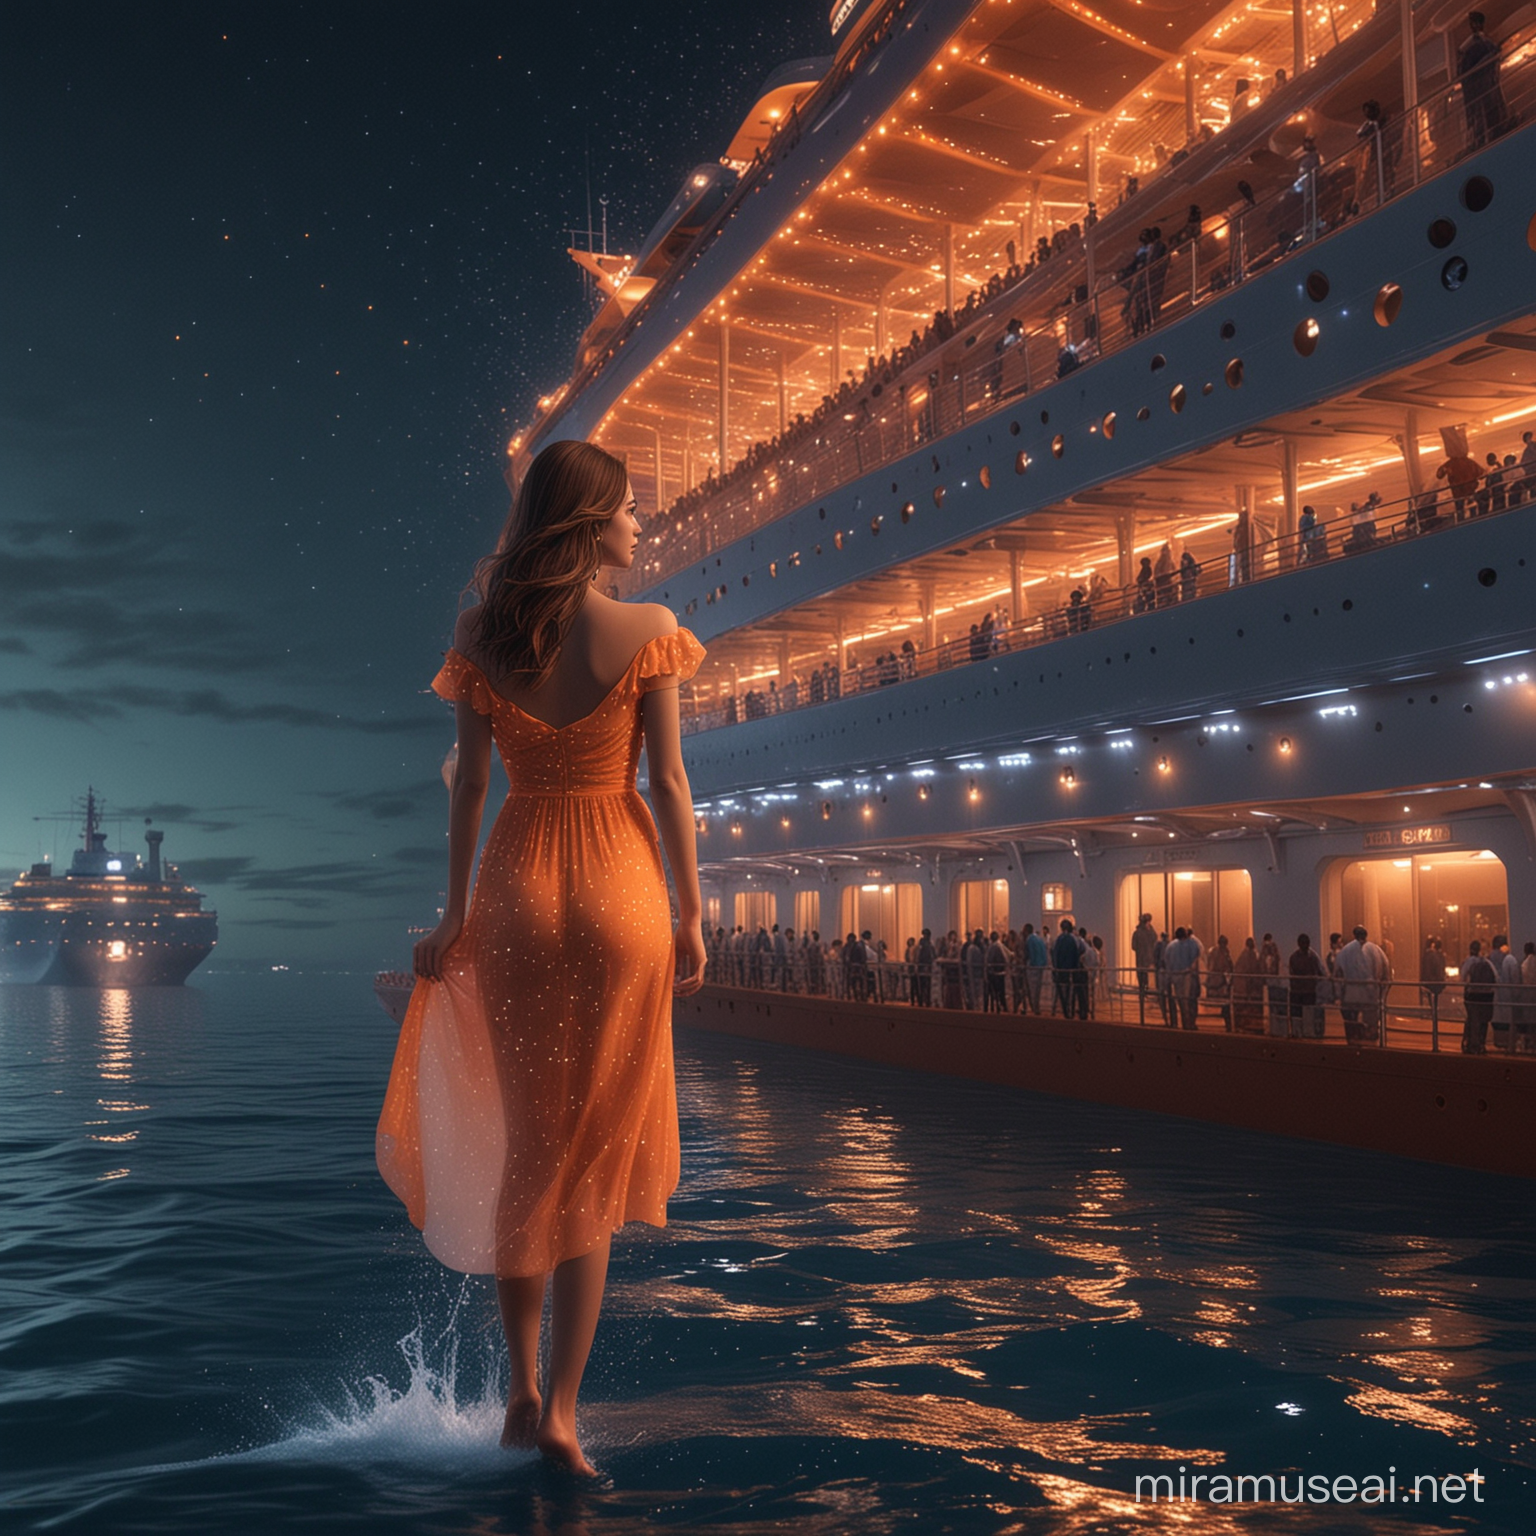 Elegant Women Enjoying Dolphin Spectacle on Massive Cruise Ship at Midnight